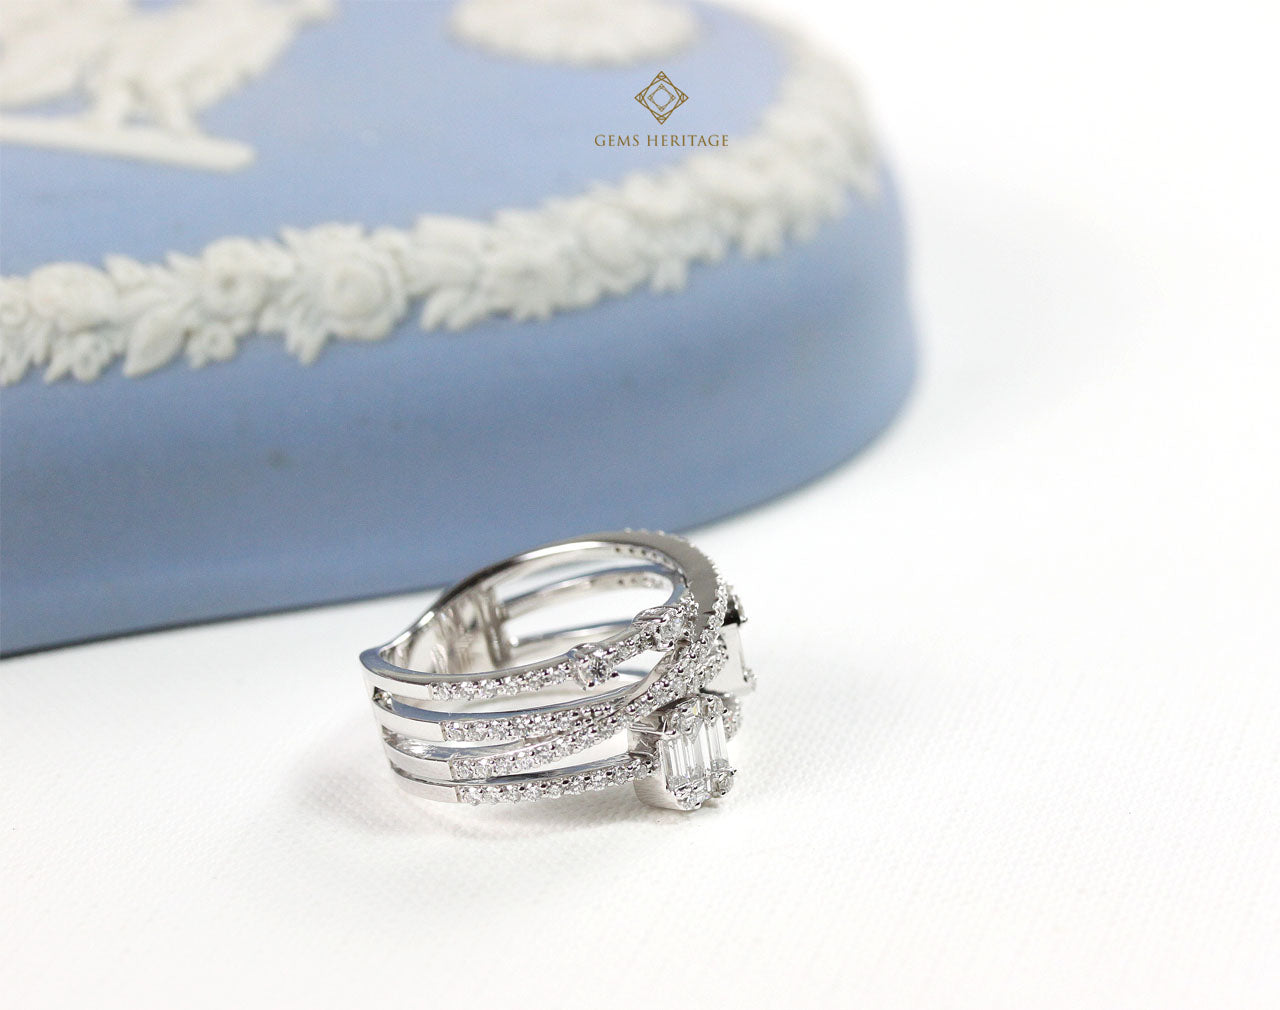 Sophisticated twist emerald cut diamond ring (rwg245)